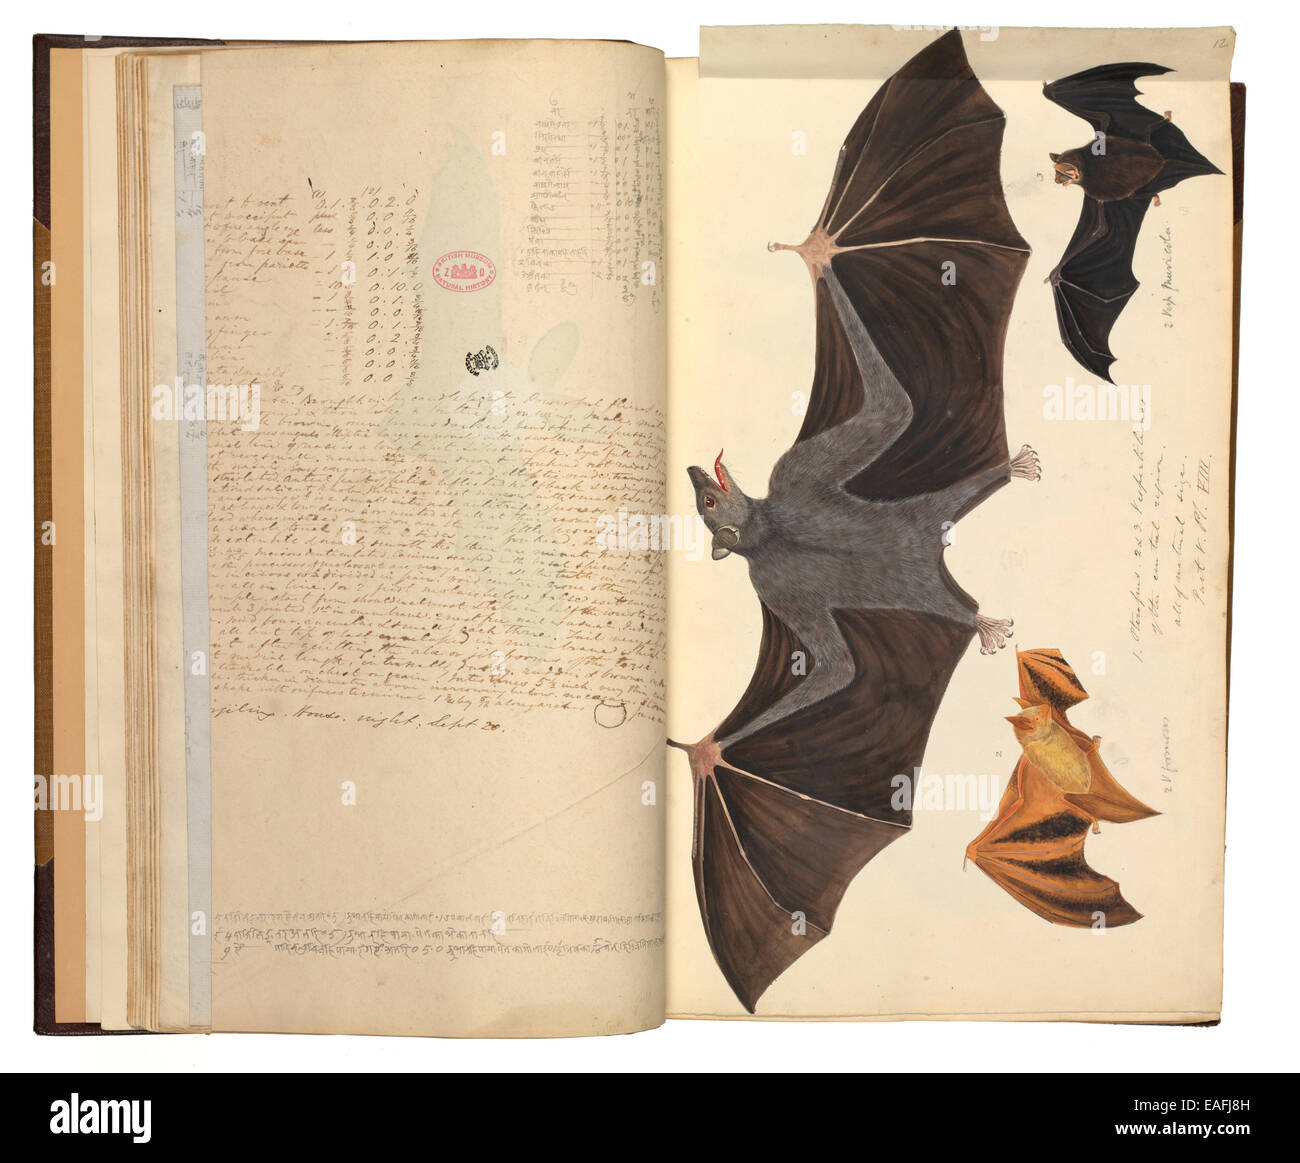 Flying Fox ; Pteropus sp. ; Hodgson's myotis Myotis formosus ; ; ; Myotis myotis moustac népalais muricola Banque D'Images